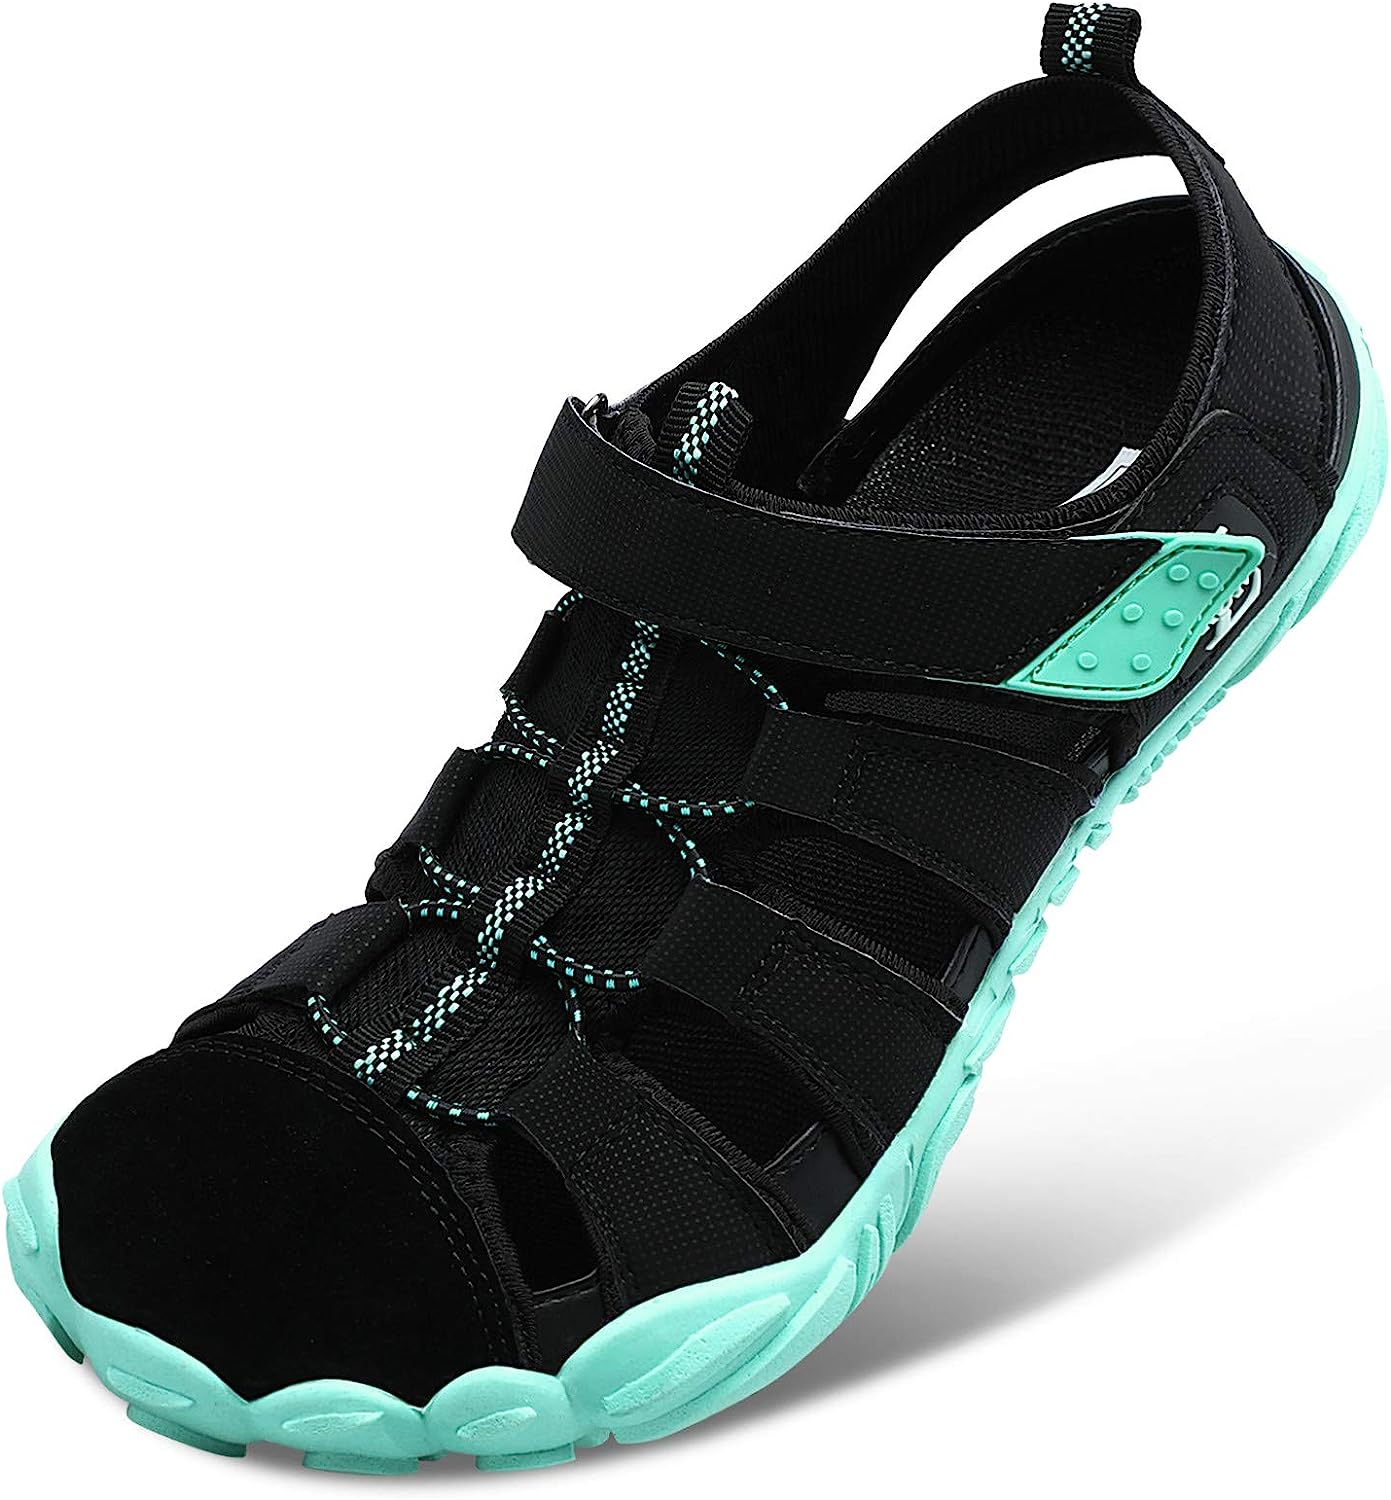 JIASUQI Athletic Hiking Water Shoes Barefoot Aqua Swim [...]